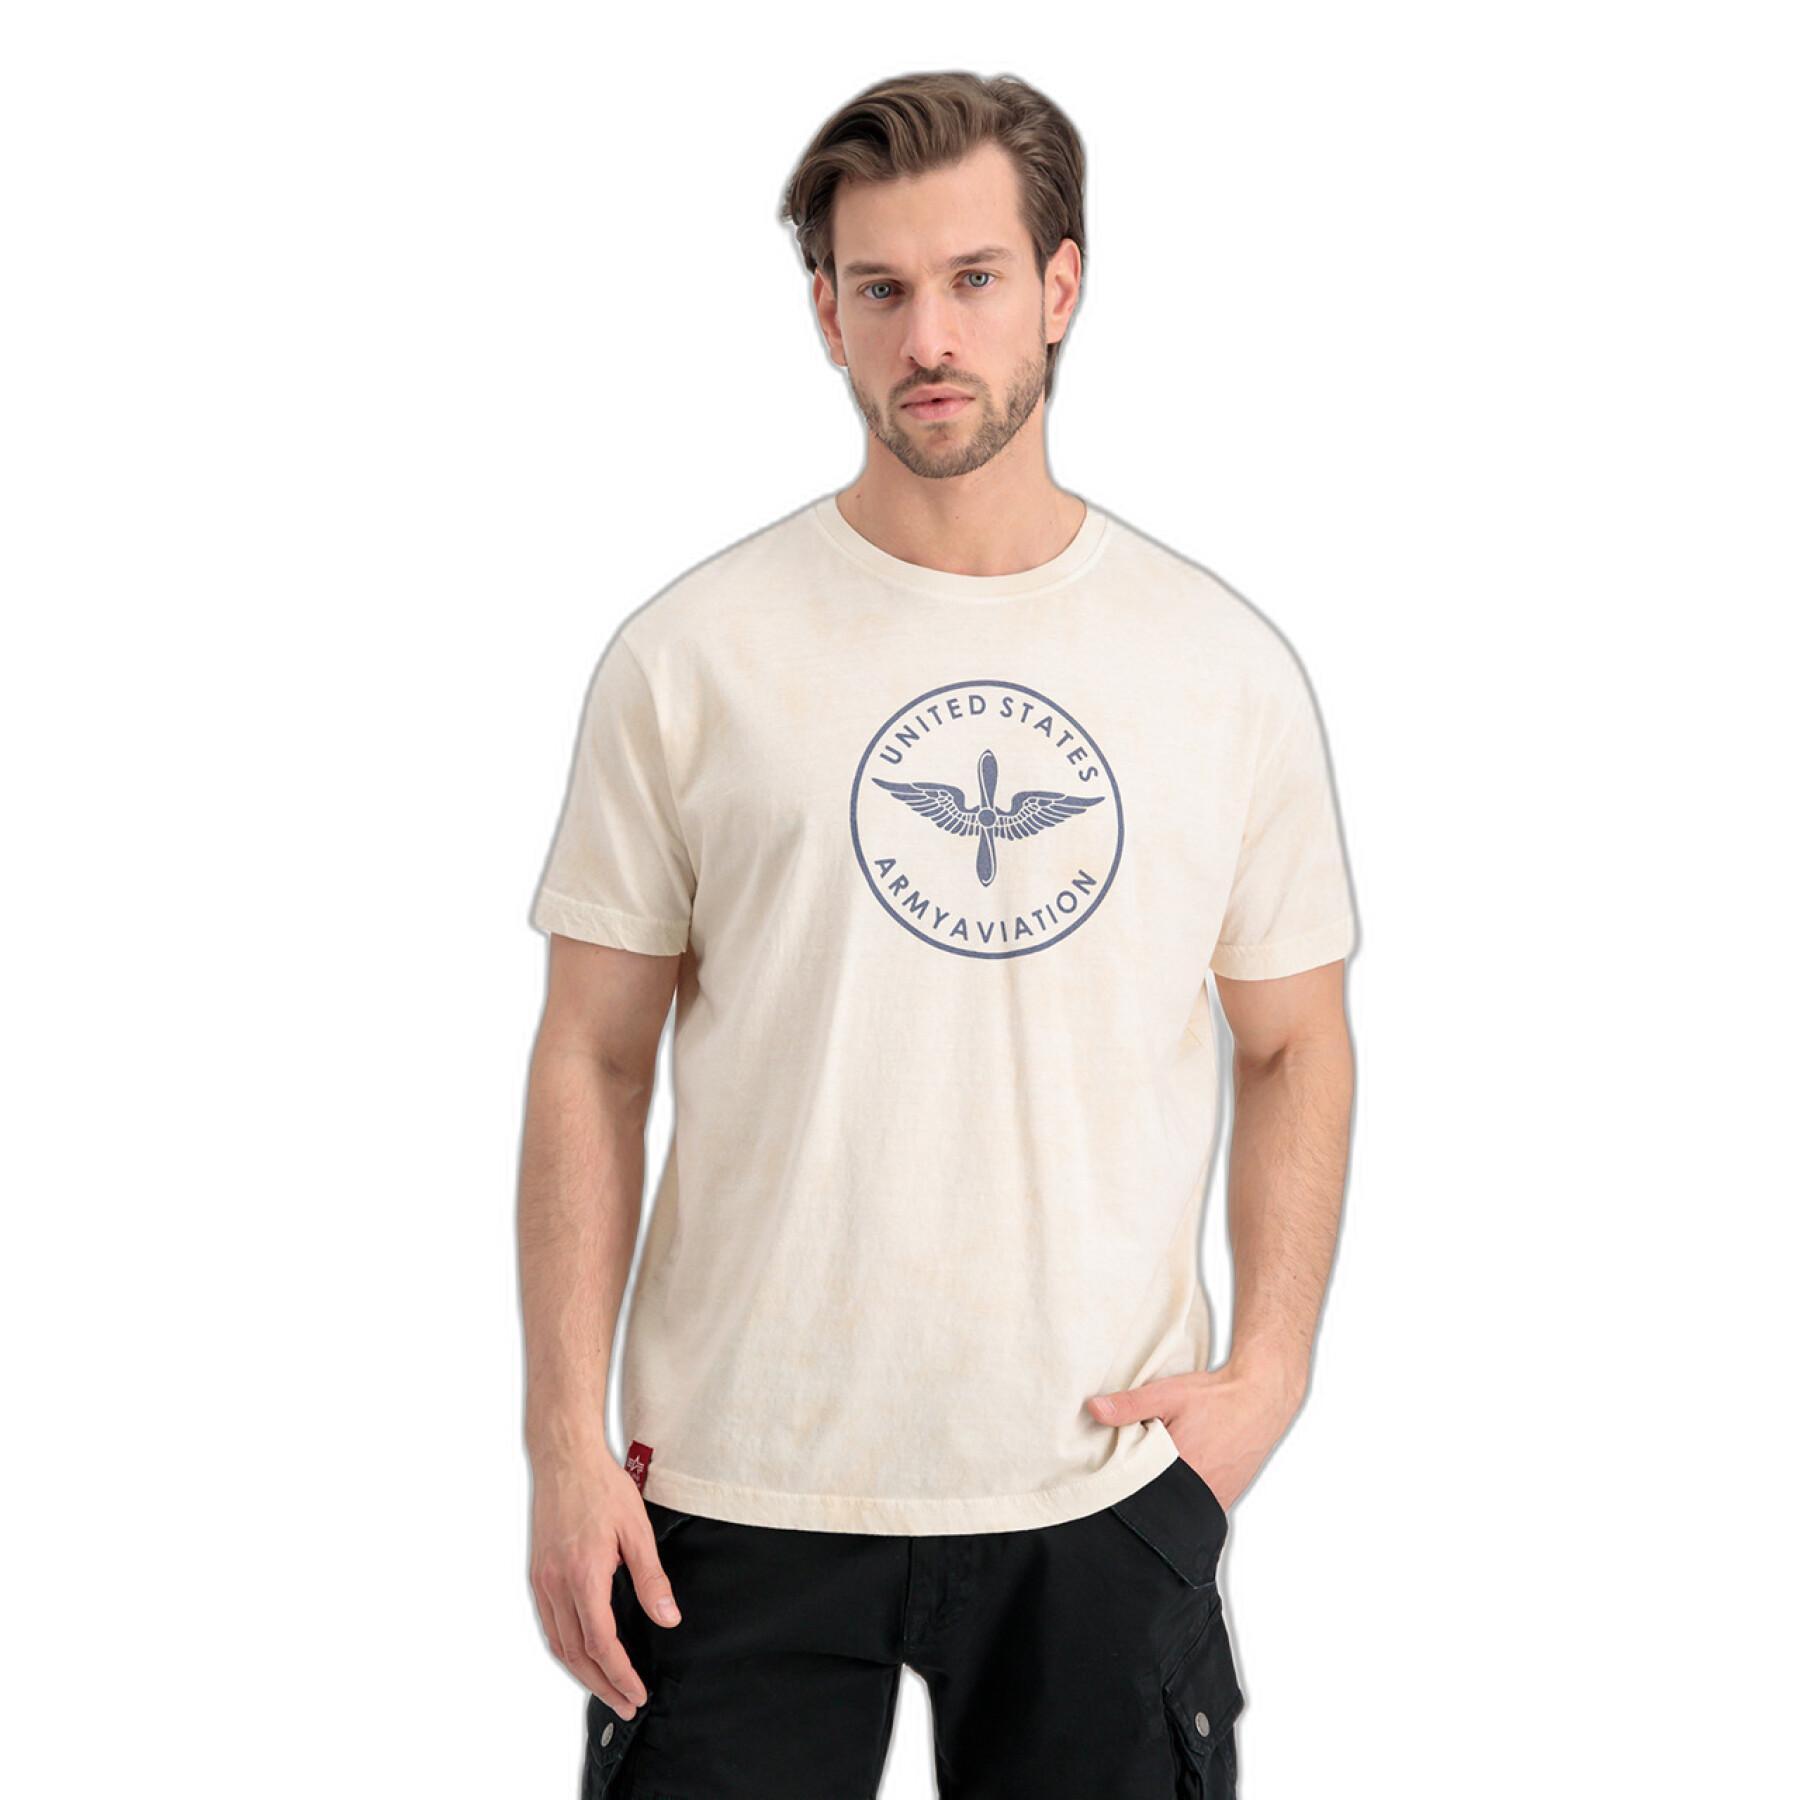 & - Alpha Clothing shirts Vintage - - Industries T-shirts T-shirt Polo Men Aviation